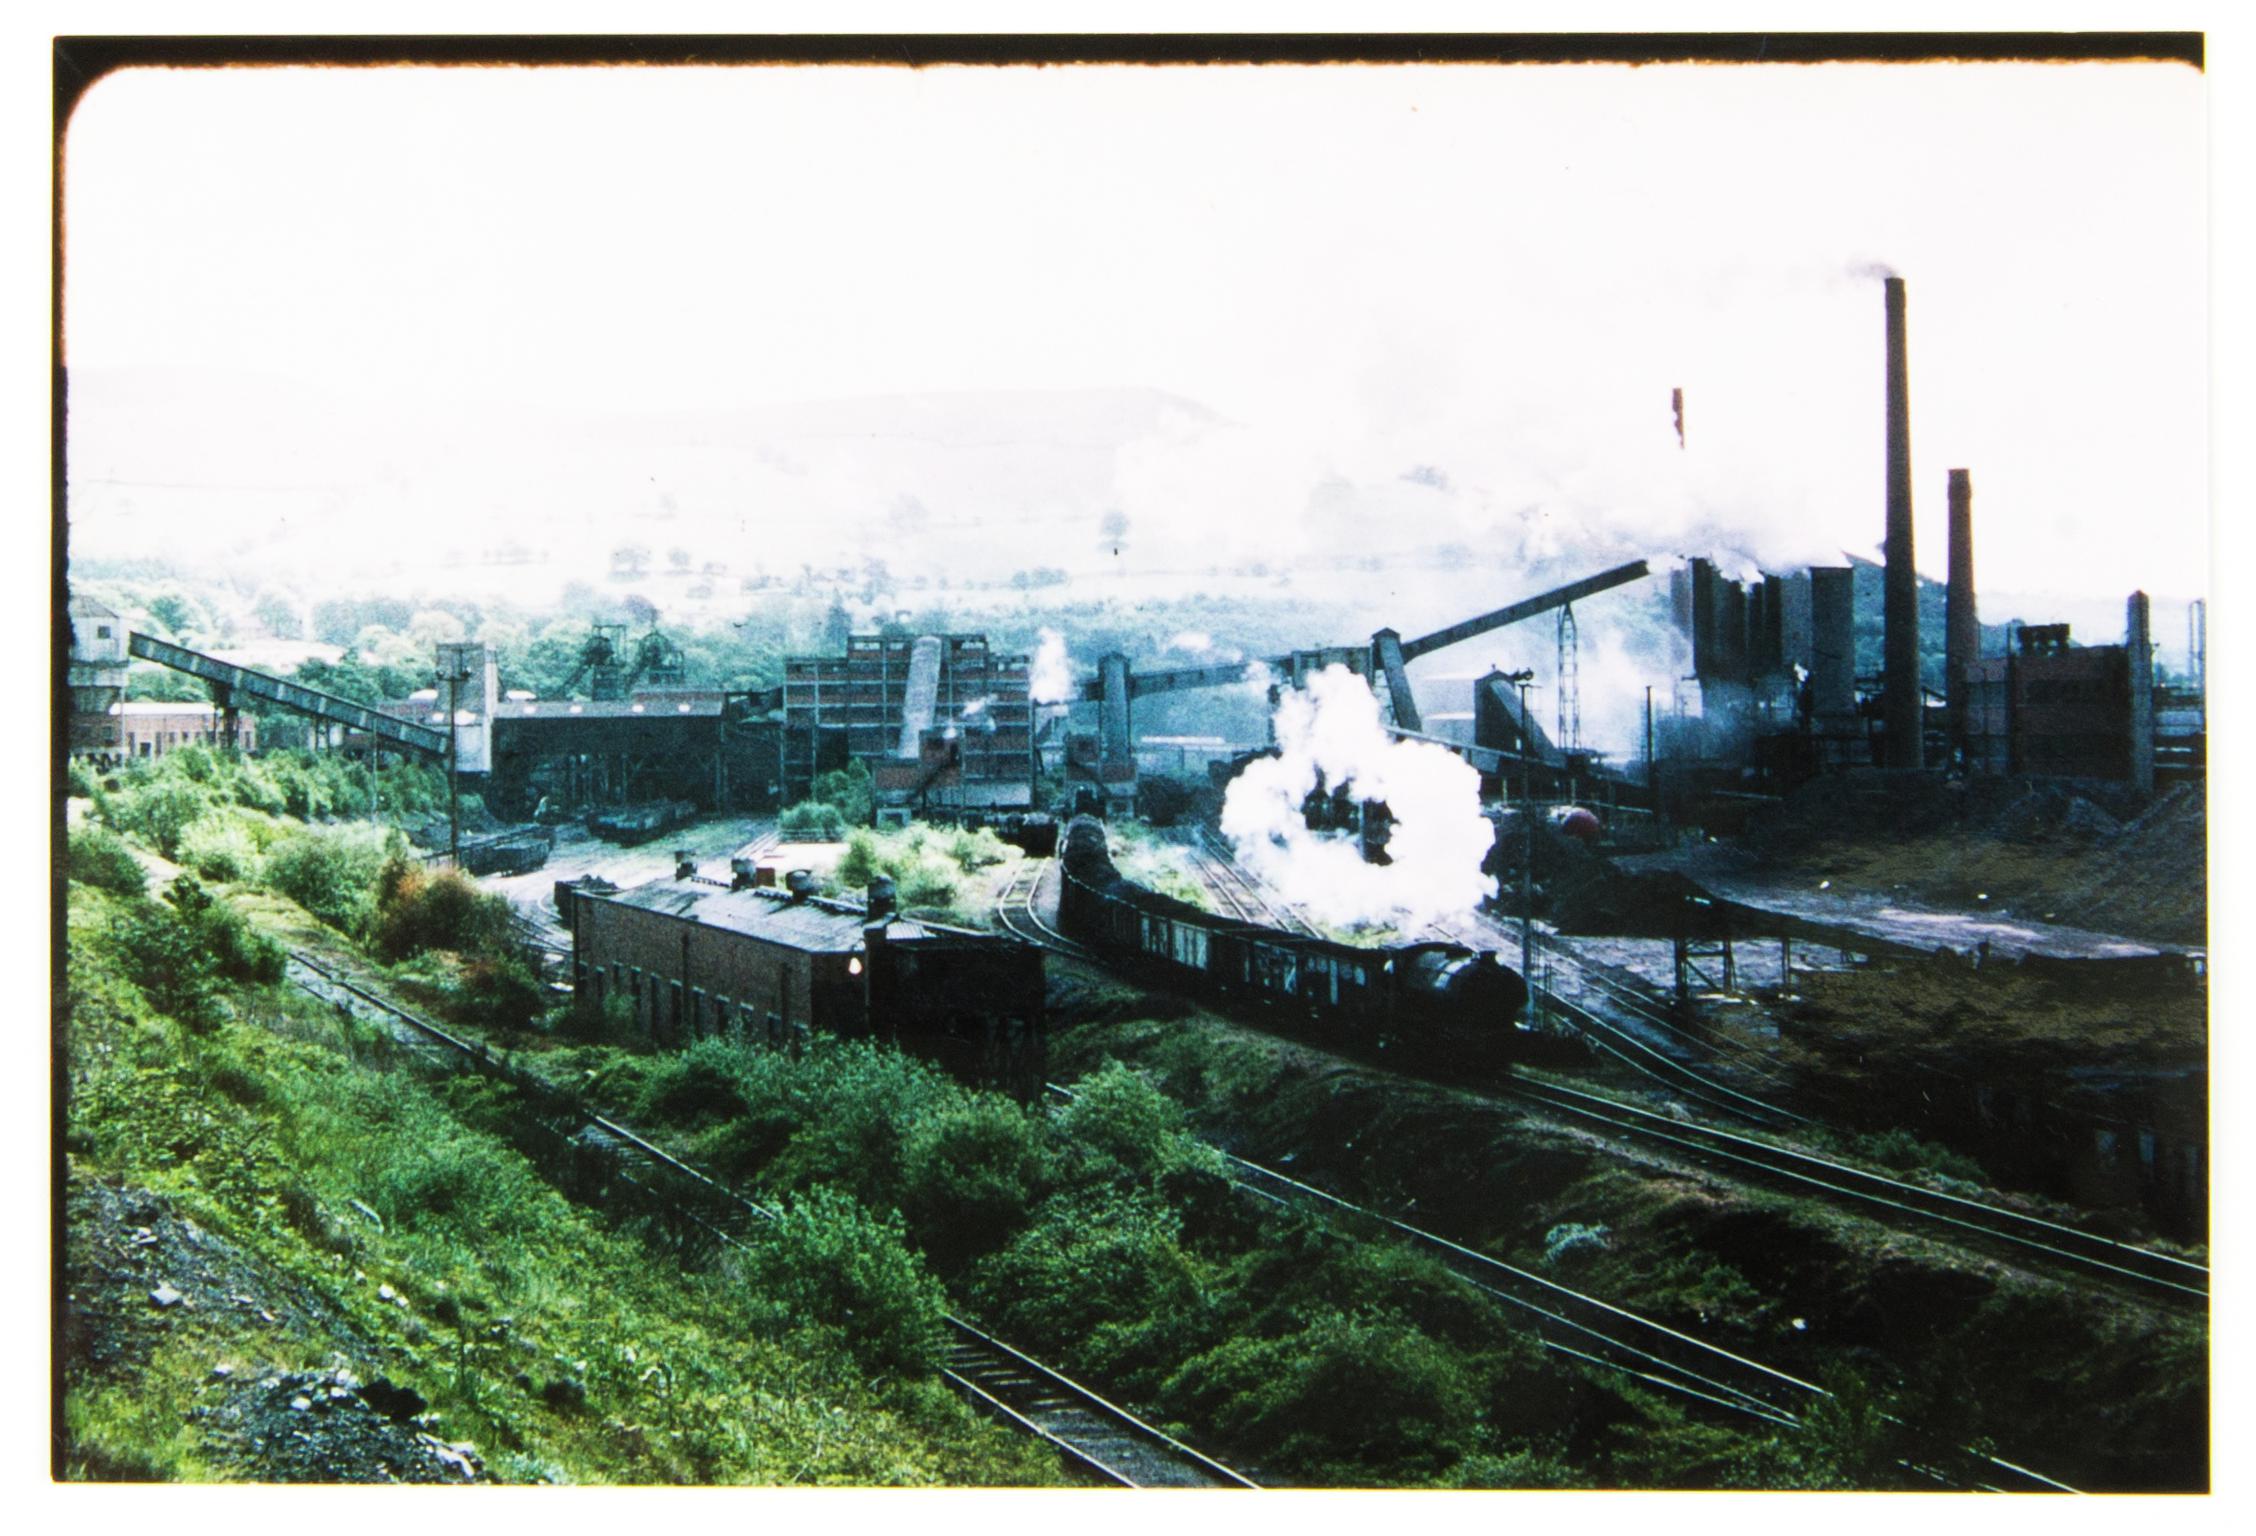 Nantgarw Colliery & coke ovens, photograph